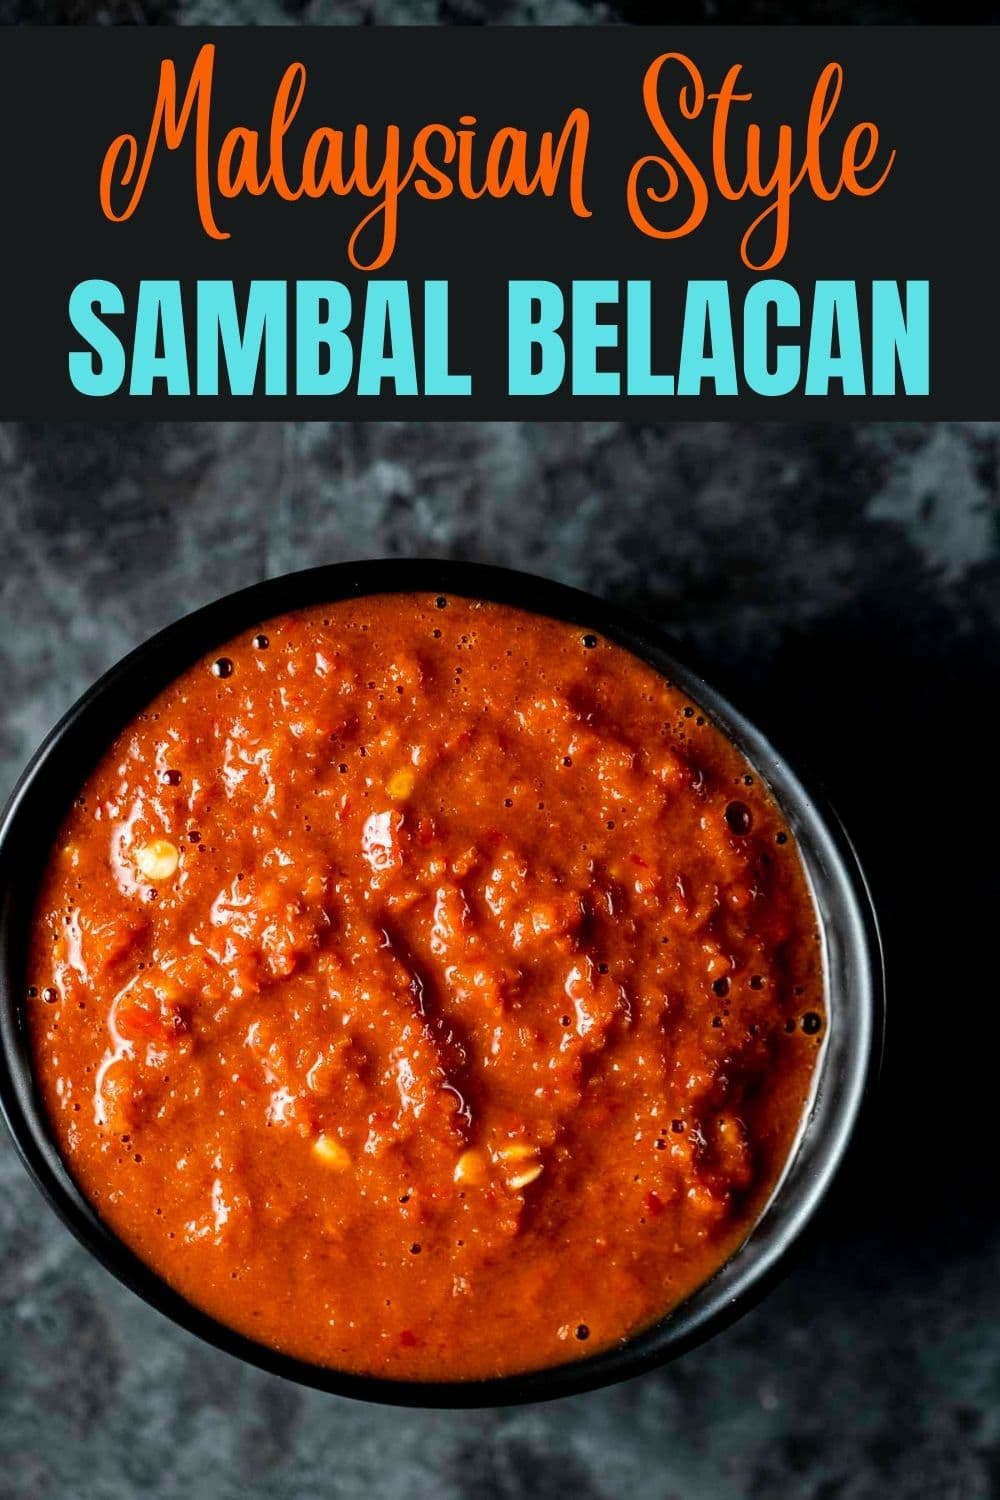 How to Make Sambal Belacan